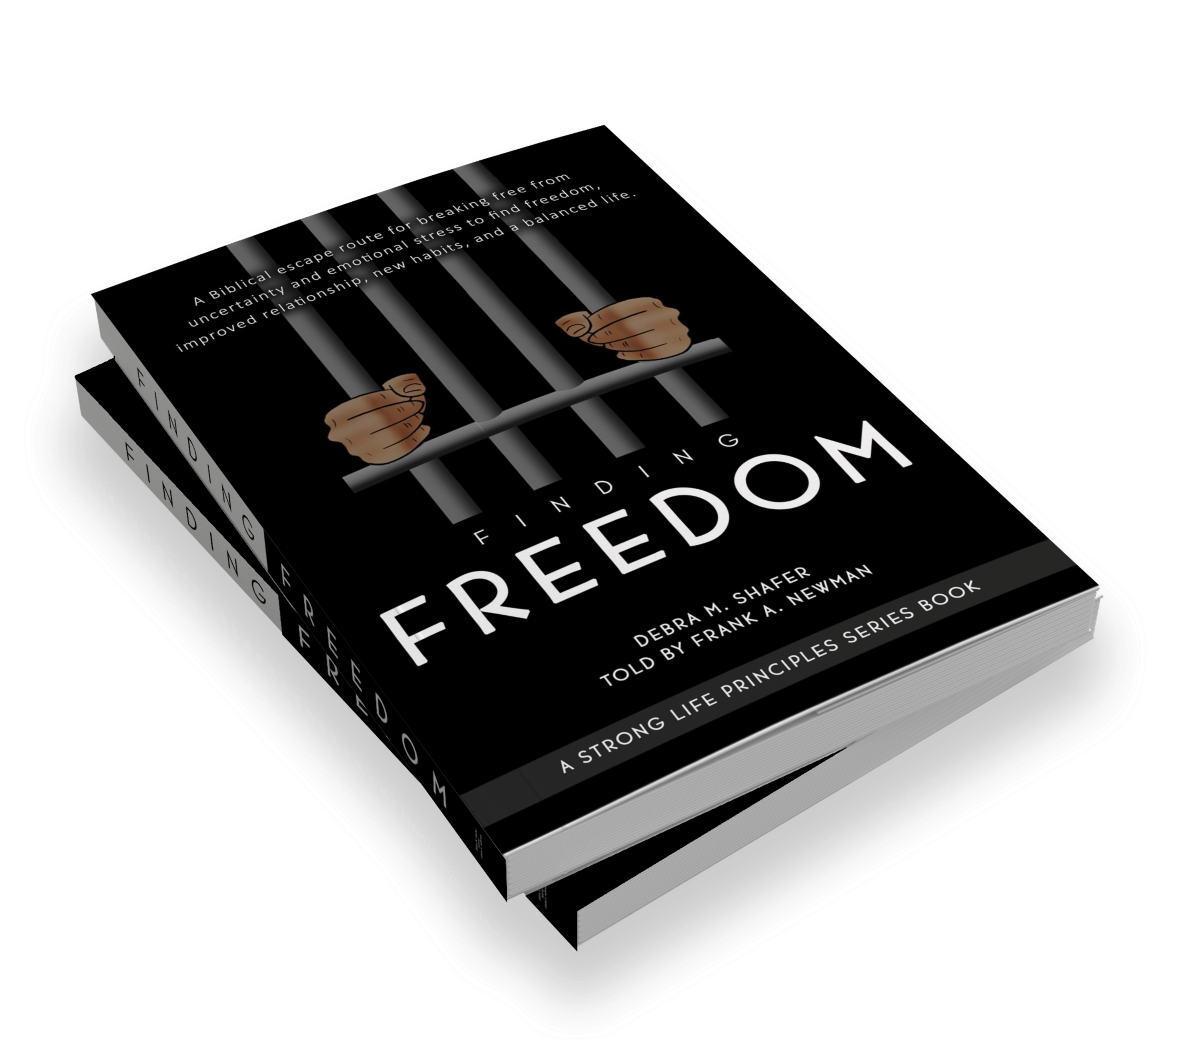 Finding Freedom Book (digital e-book)